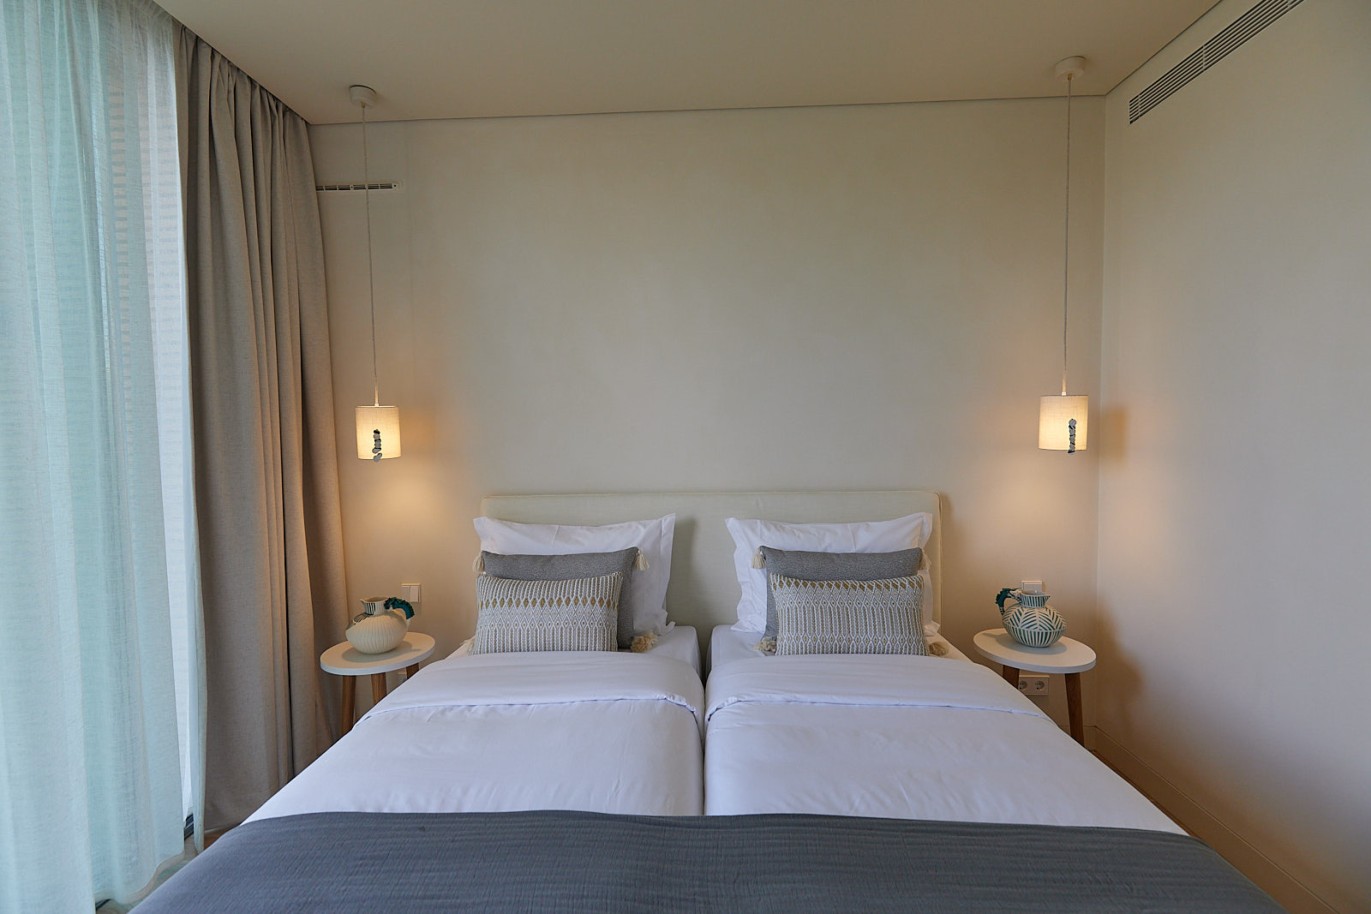 2 bedroom apartment in resort, for sale in Porches, Algarve_229210